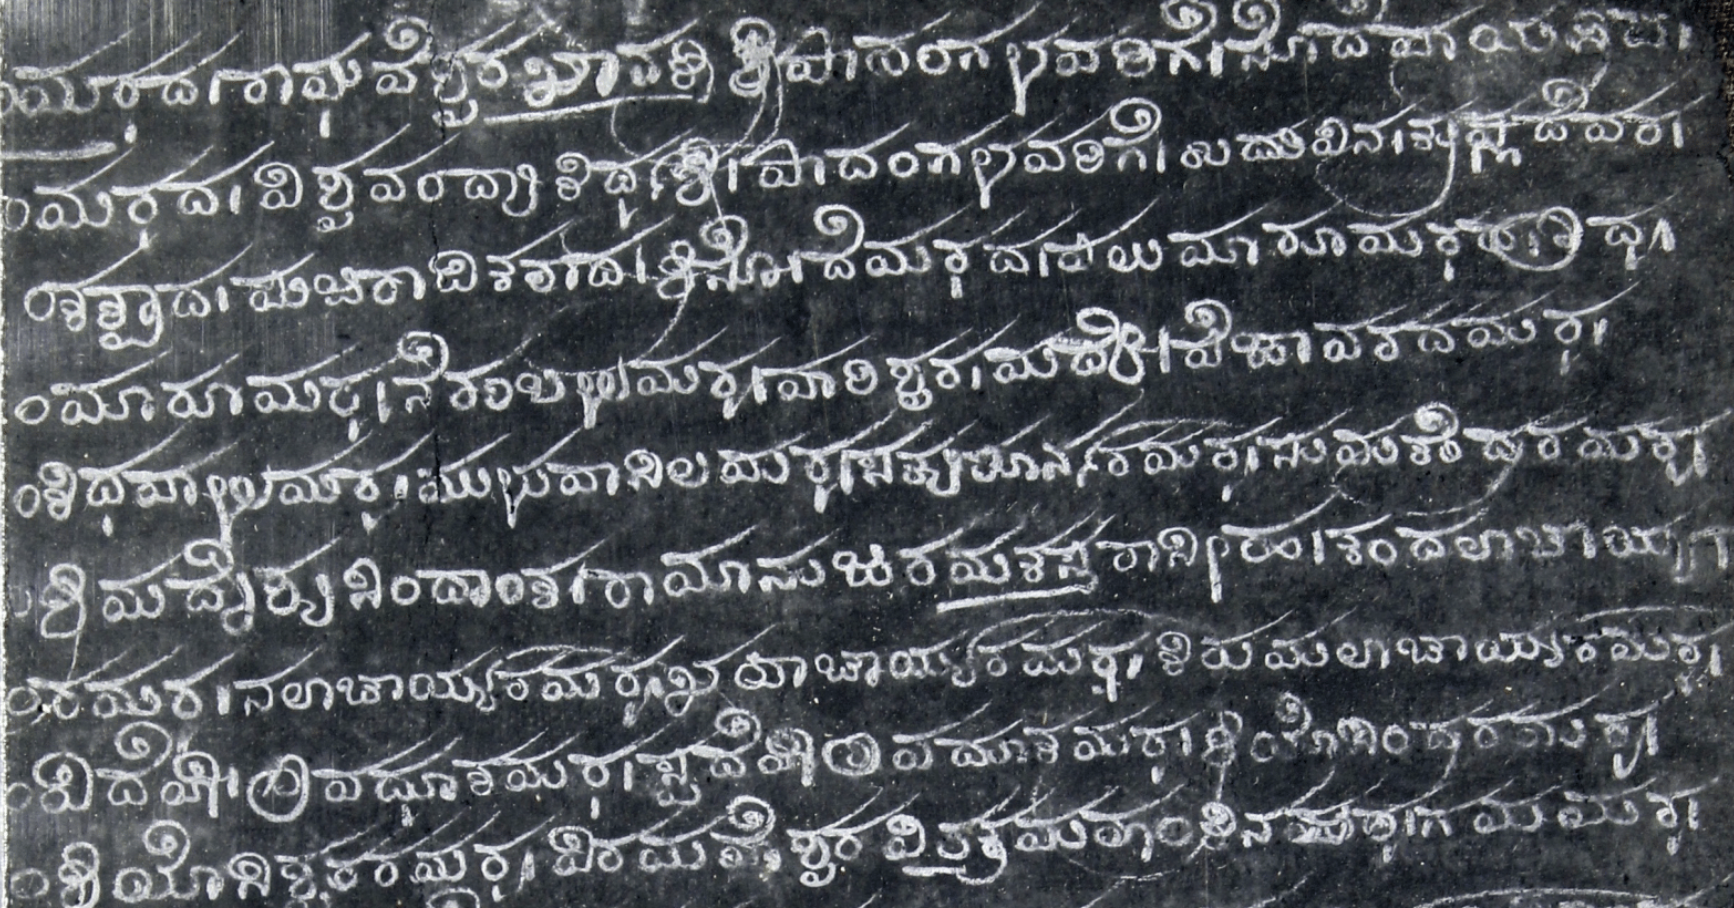 Kadata documents of Venkatappa Nayaka